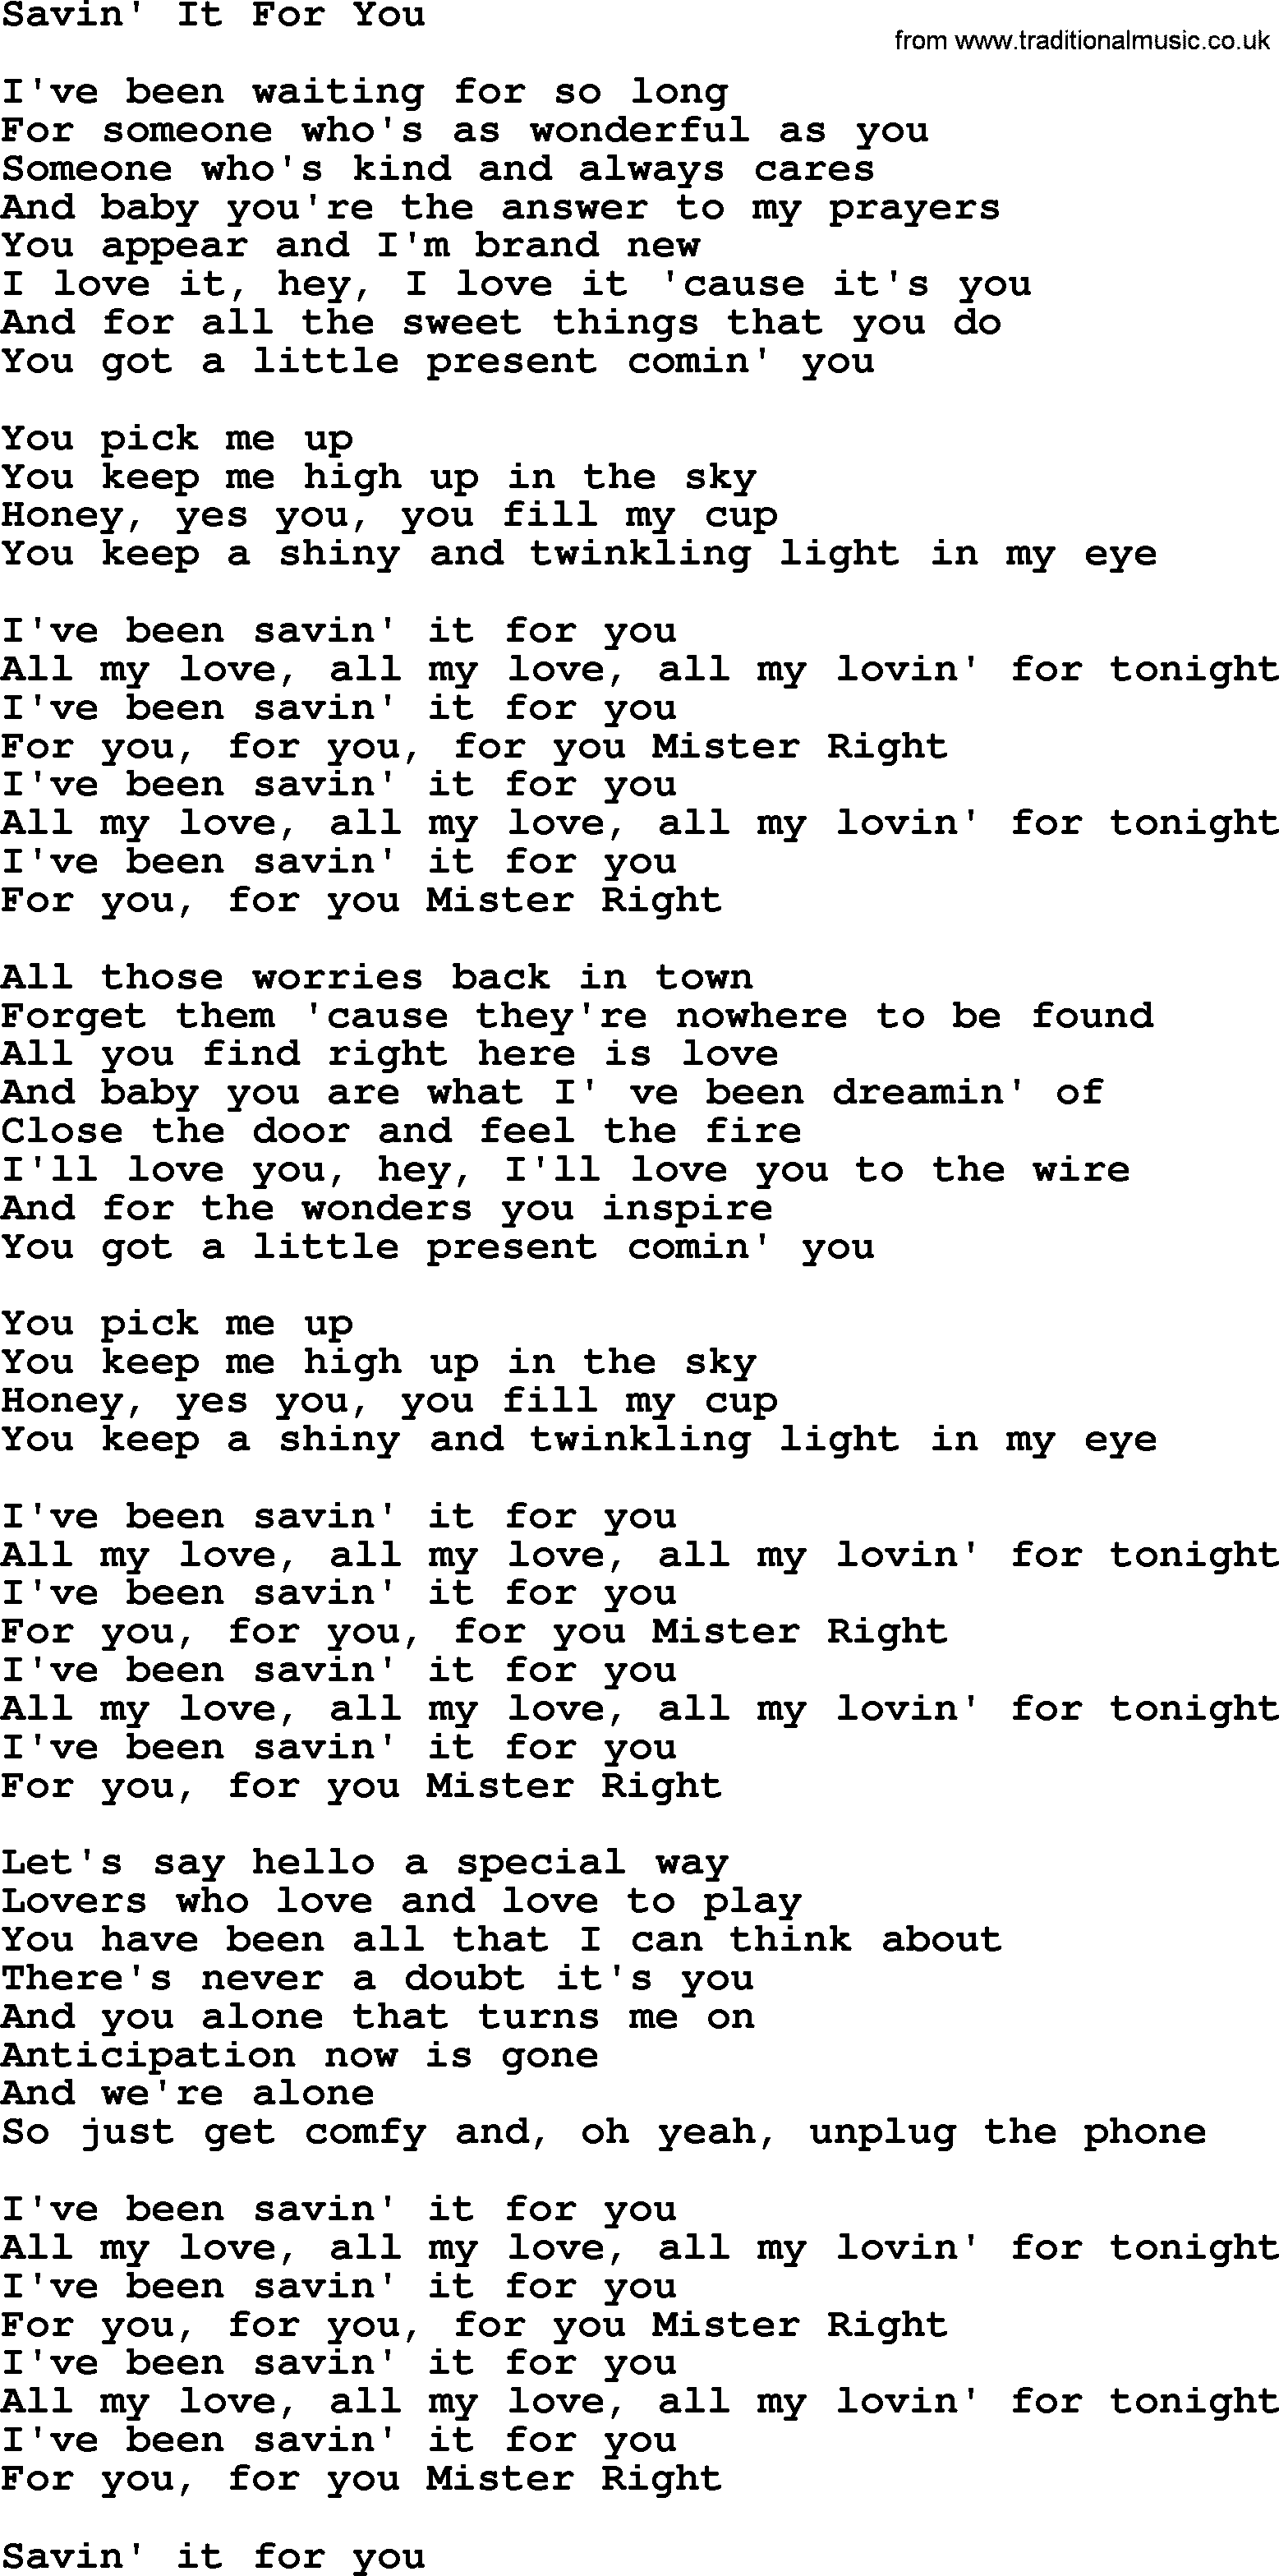 Dolly Parton song Savin' It For You.txt lyrics